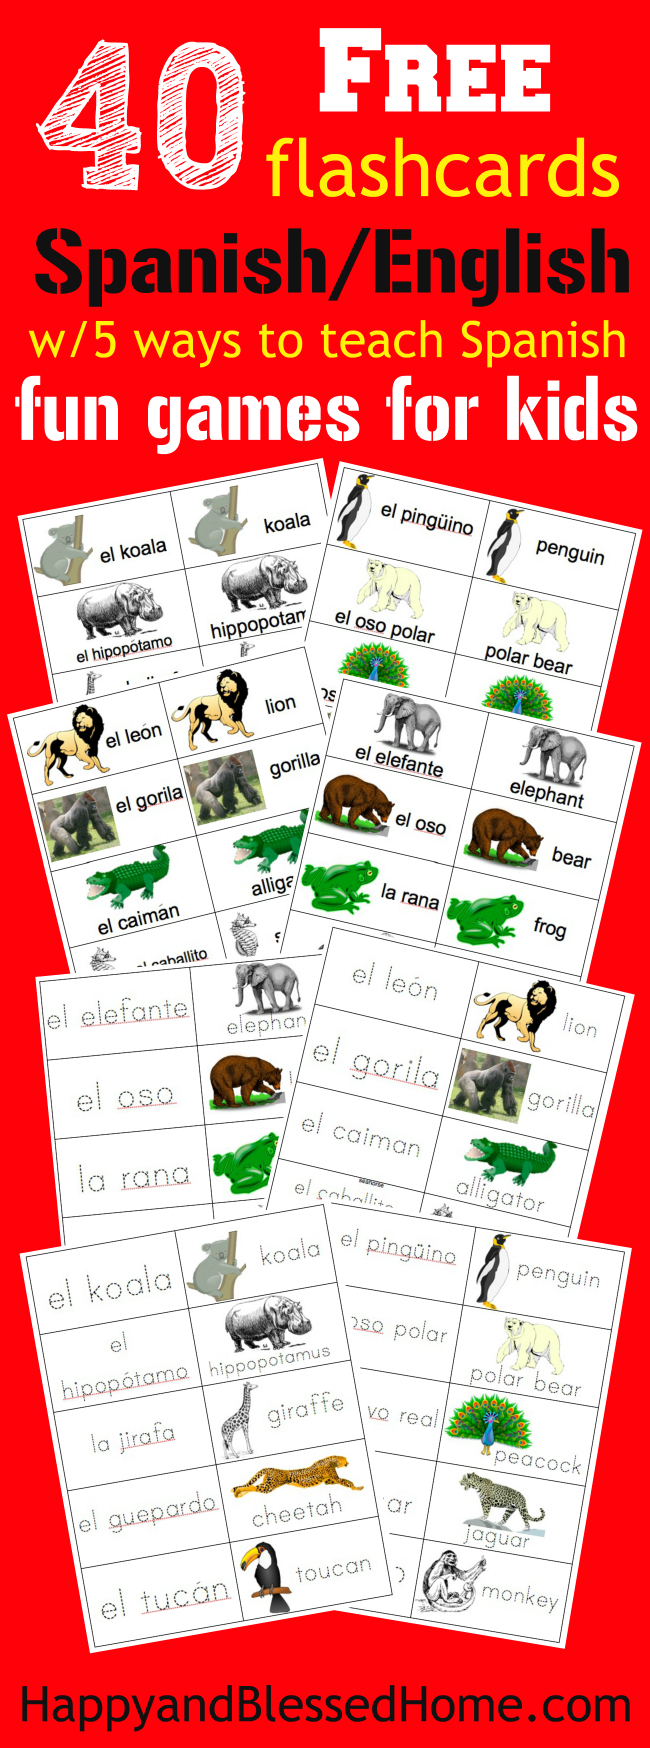 40-free-spanish-english-flashcards-of-jungle-animals-and-5-fun-games